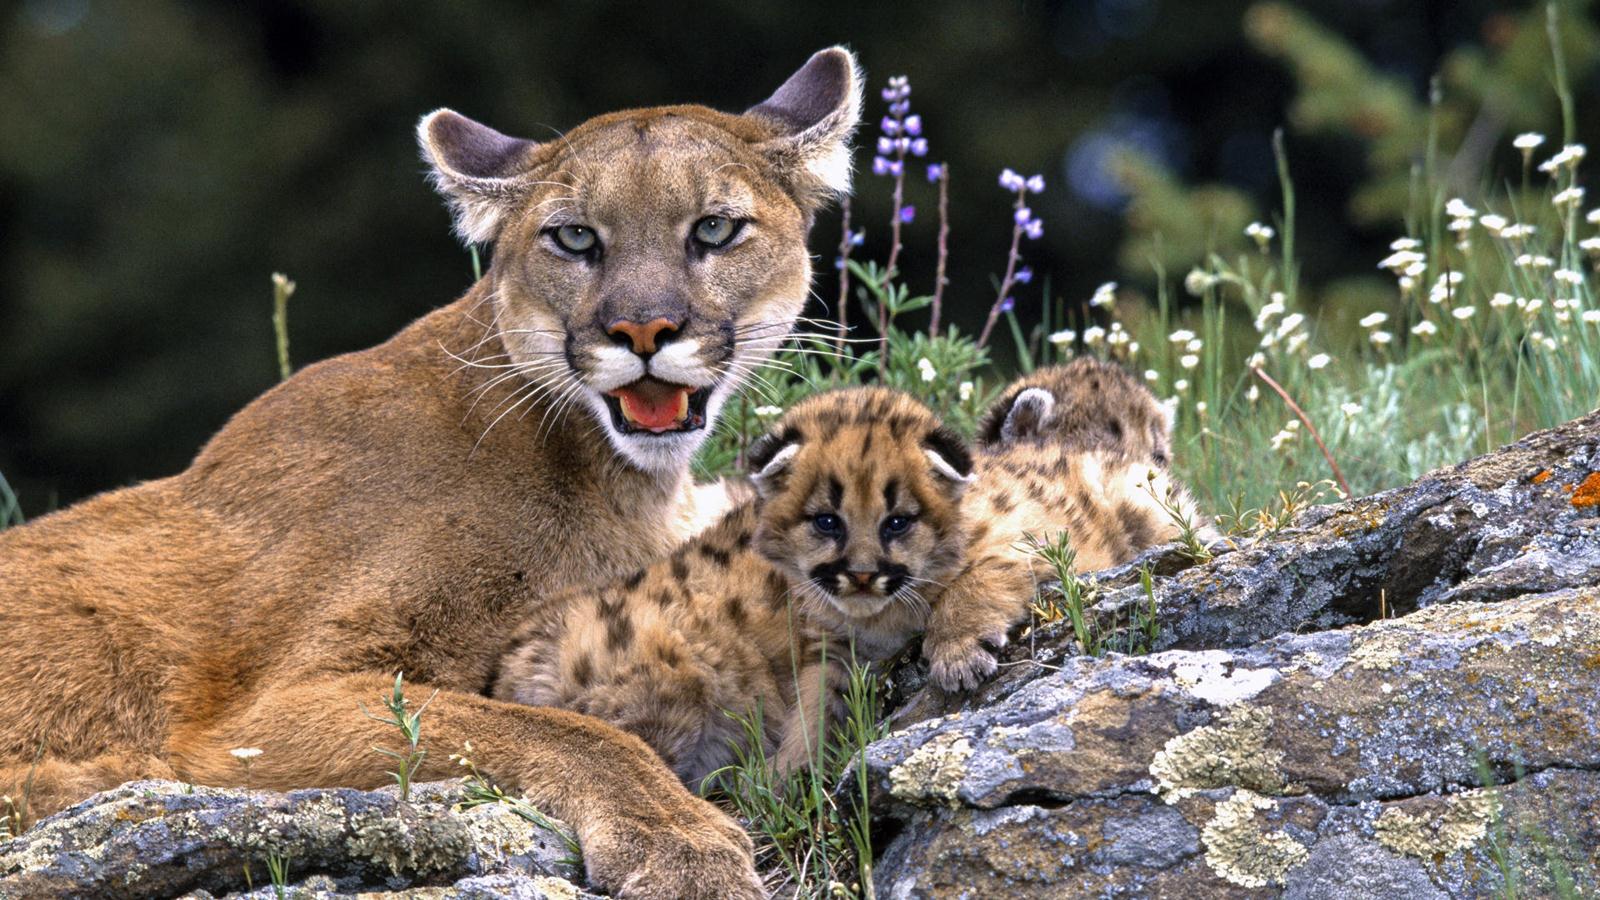 Similar Great Desktop Mountain Lion Cub Pics Dowload New